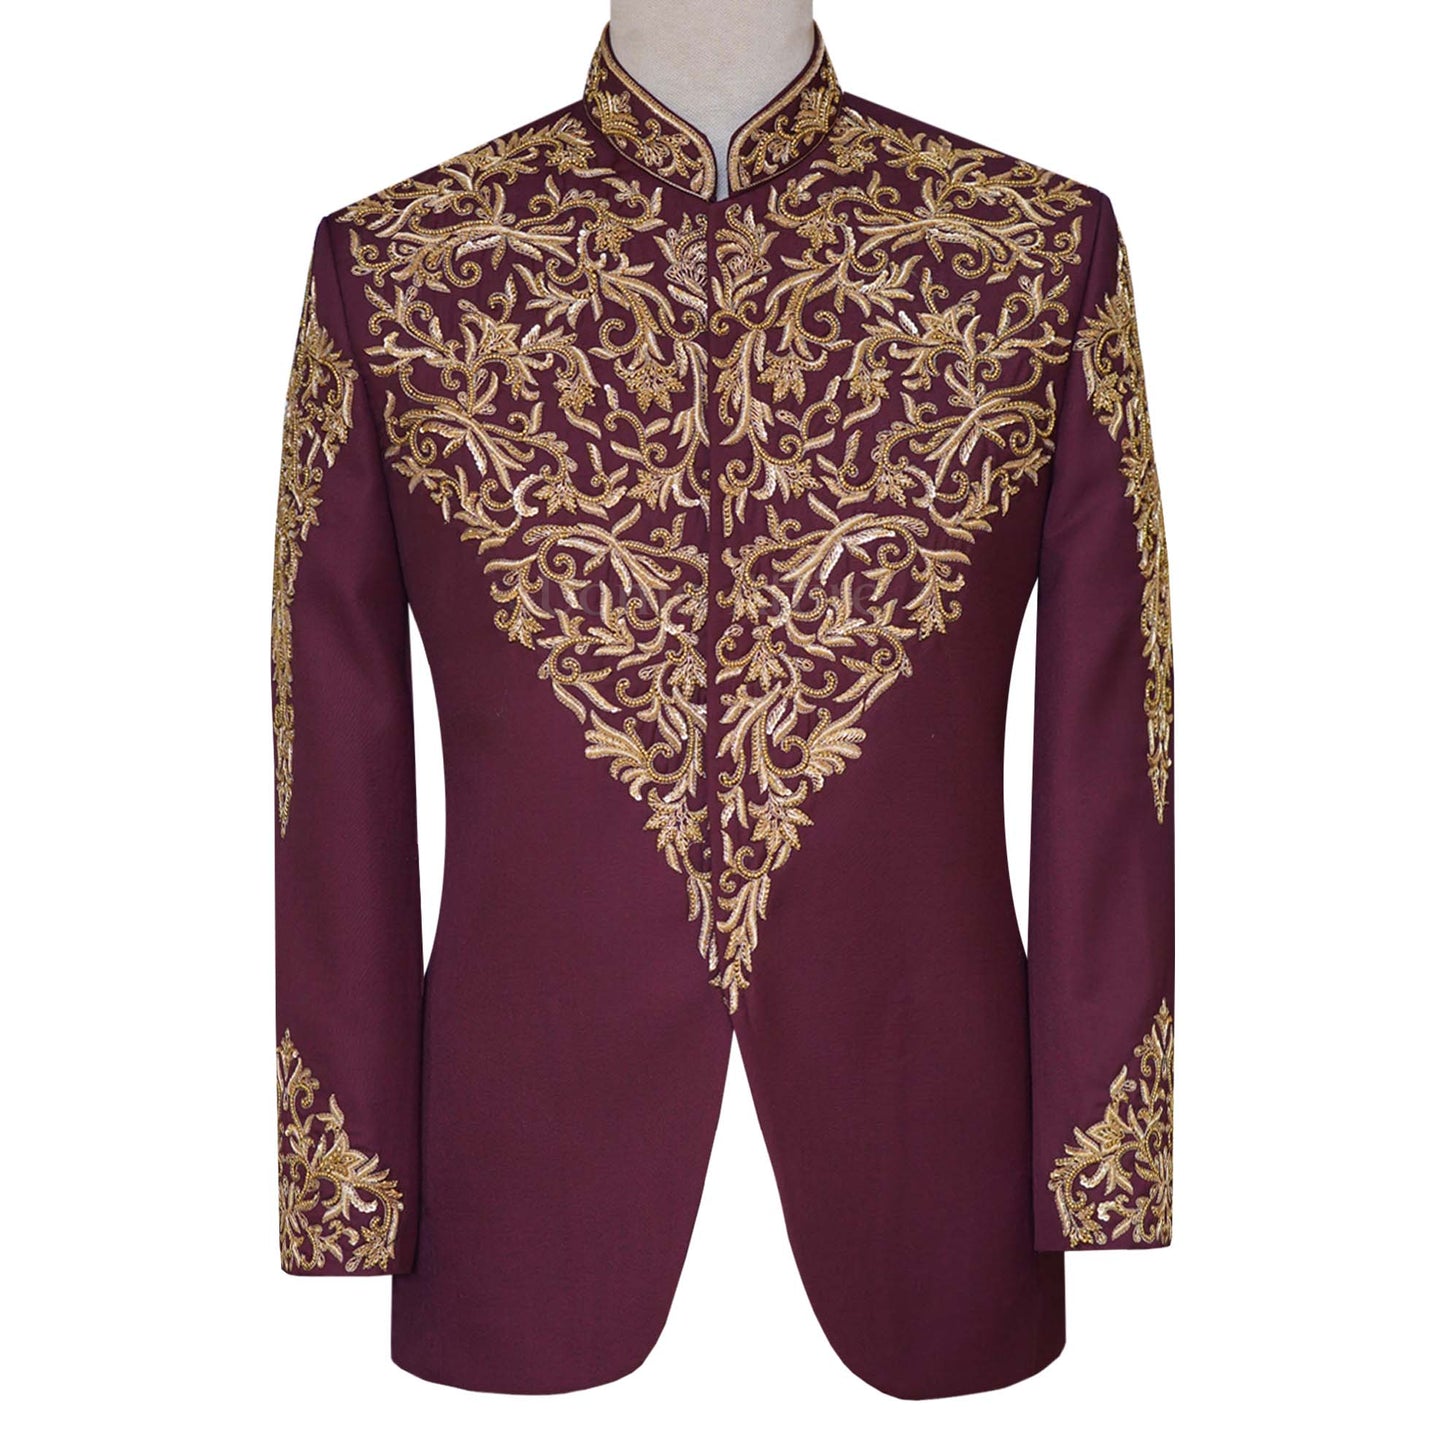 Premium quality fabric embellished maroon prince coat | Wedding Prince Coat for Groom